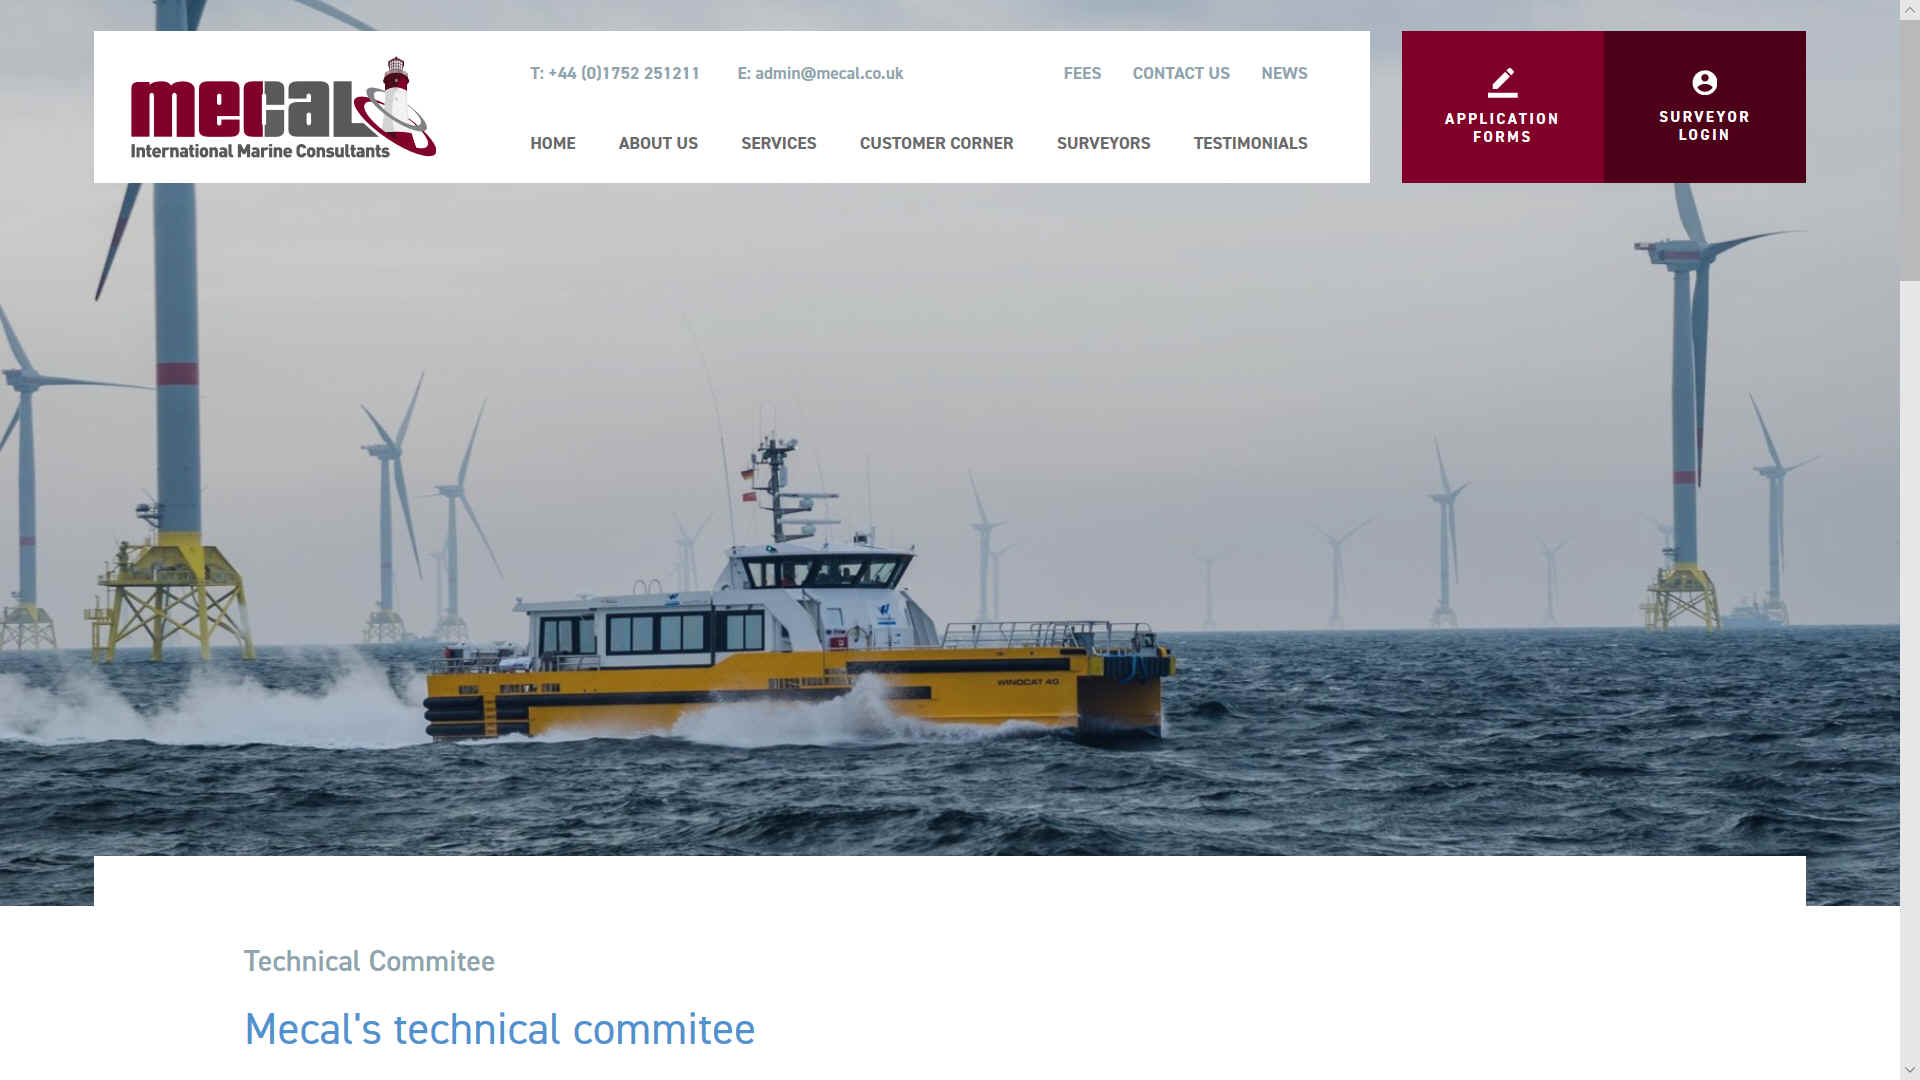 Mecal International Marine Consultants, workboat certification